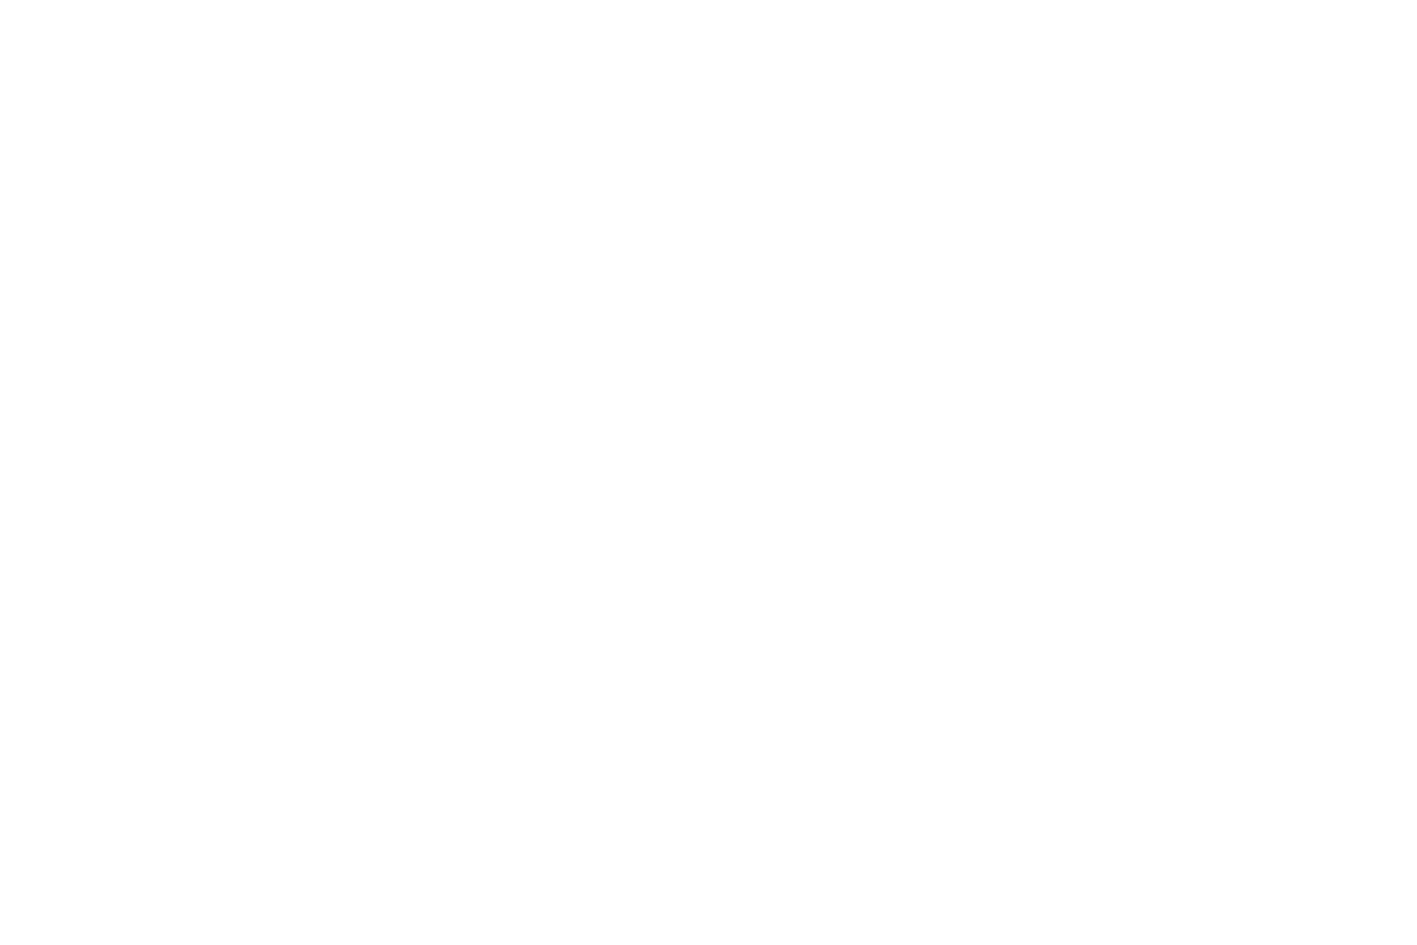 Mattila bros - Bratwurst